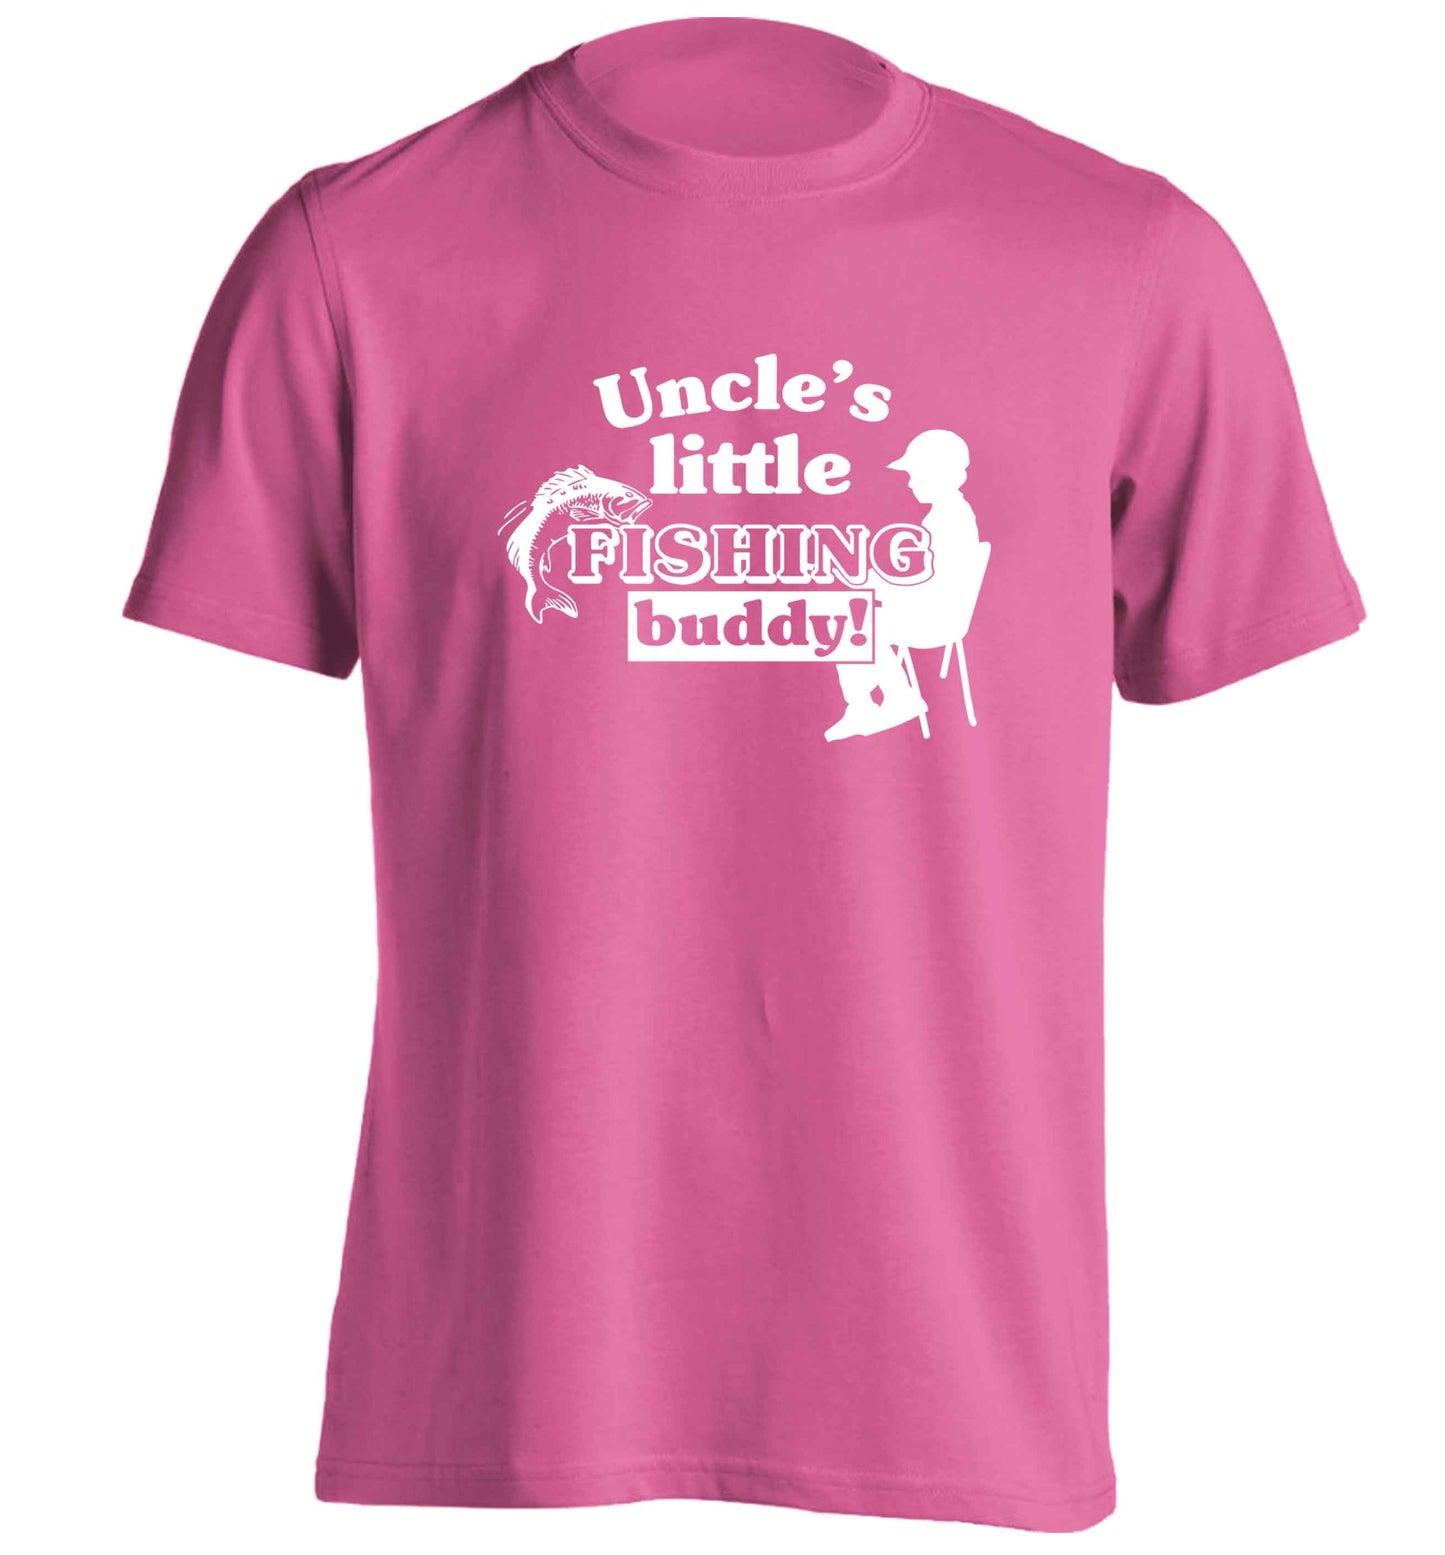 Uncle's little fishing buddy adults unisex pink Tshirt 2XL